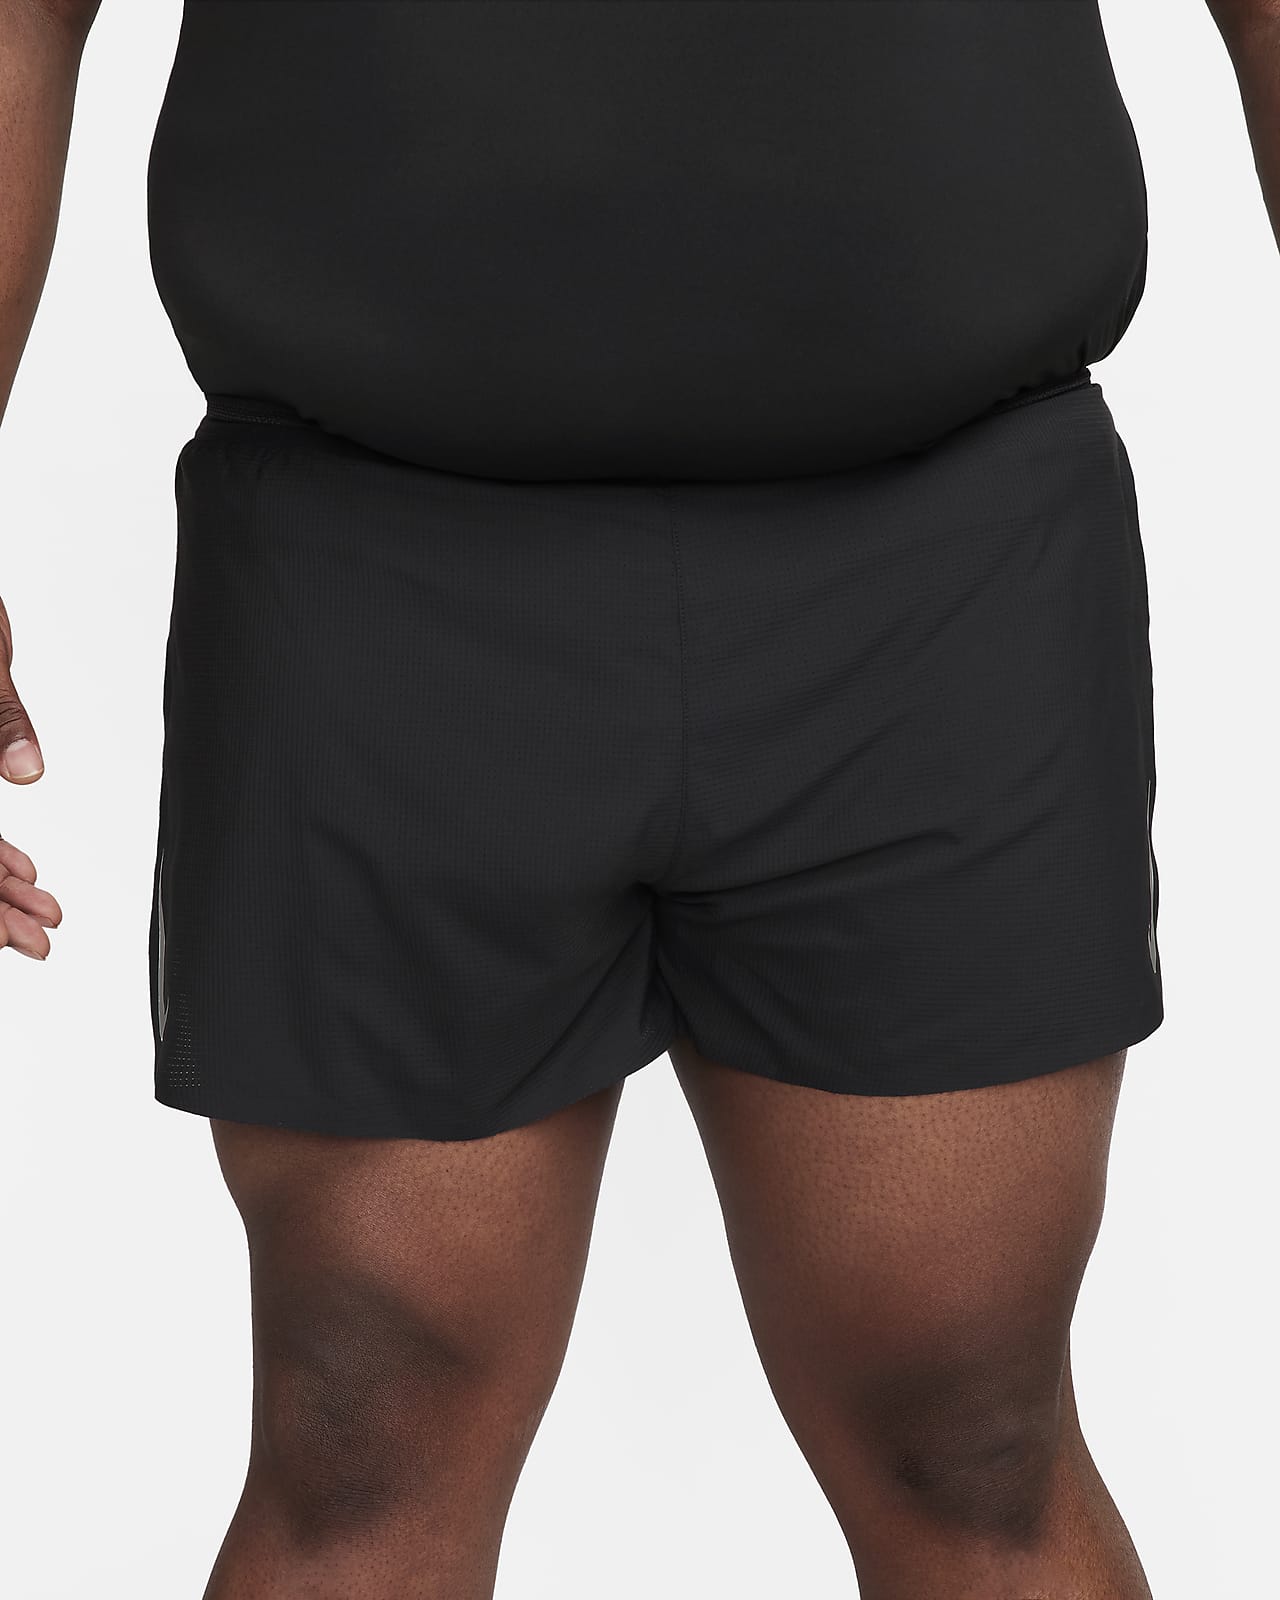 Nike Men's AeroSwift 10cm Running Short - CJ7840-010 - Black